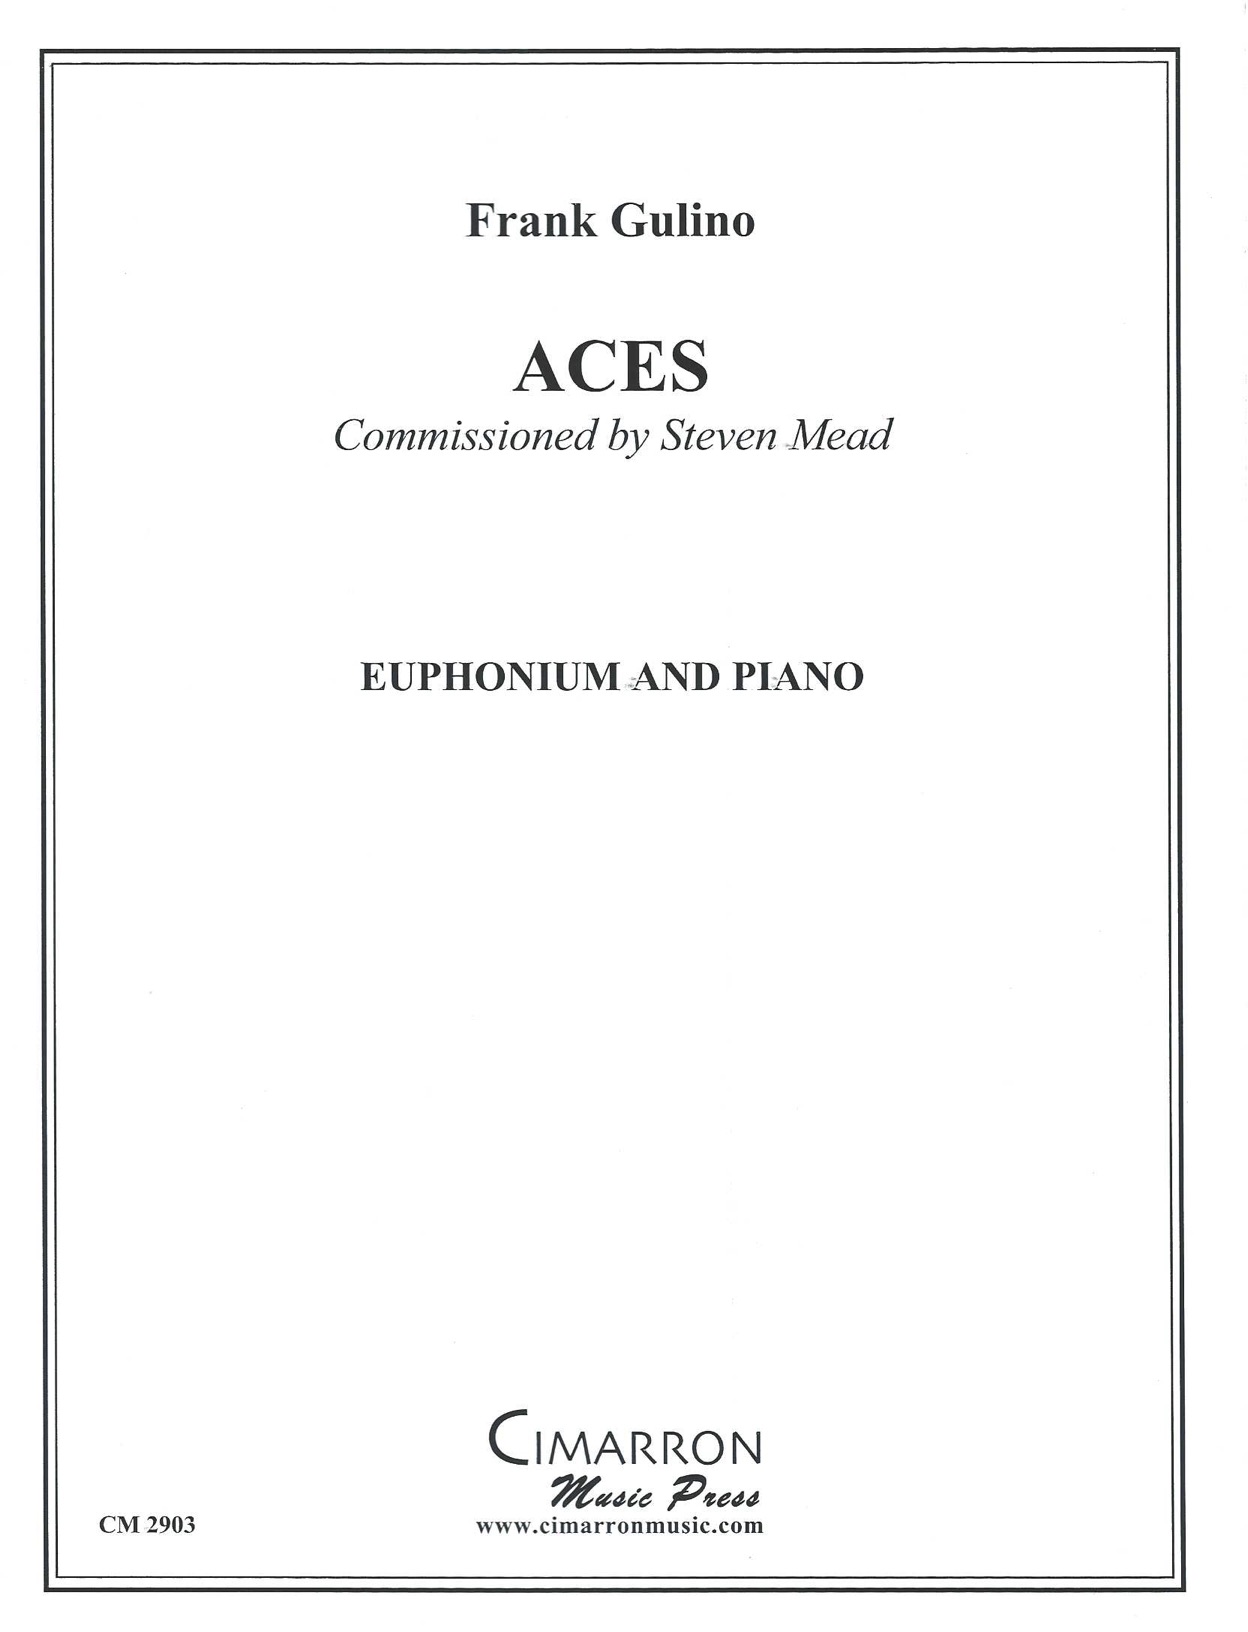 Aces - (Frank Gulino) - Euphonium solo with piano accompaniment